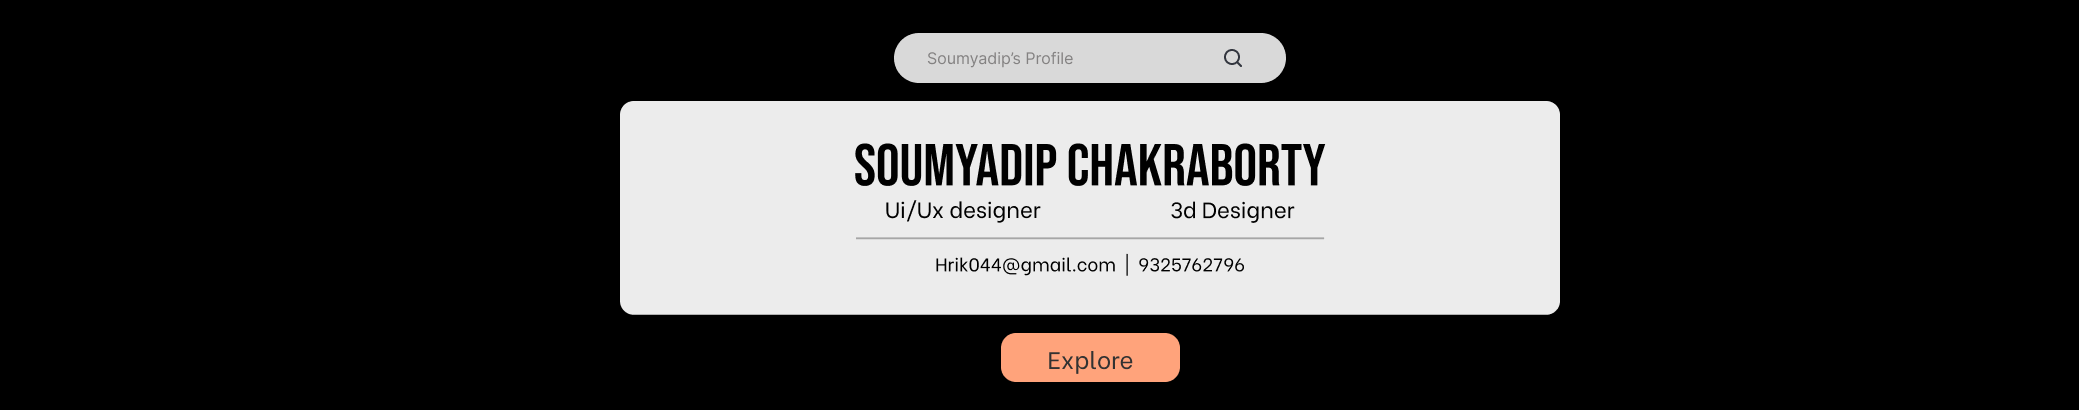 Soumyadip Chakraborty's profile banner